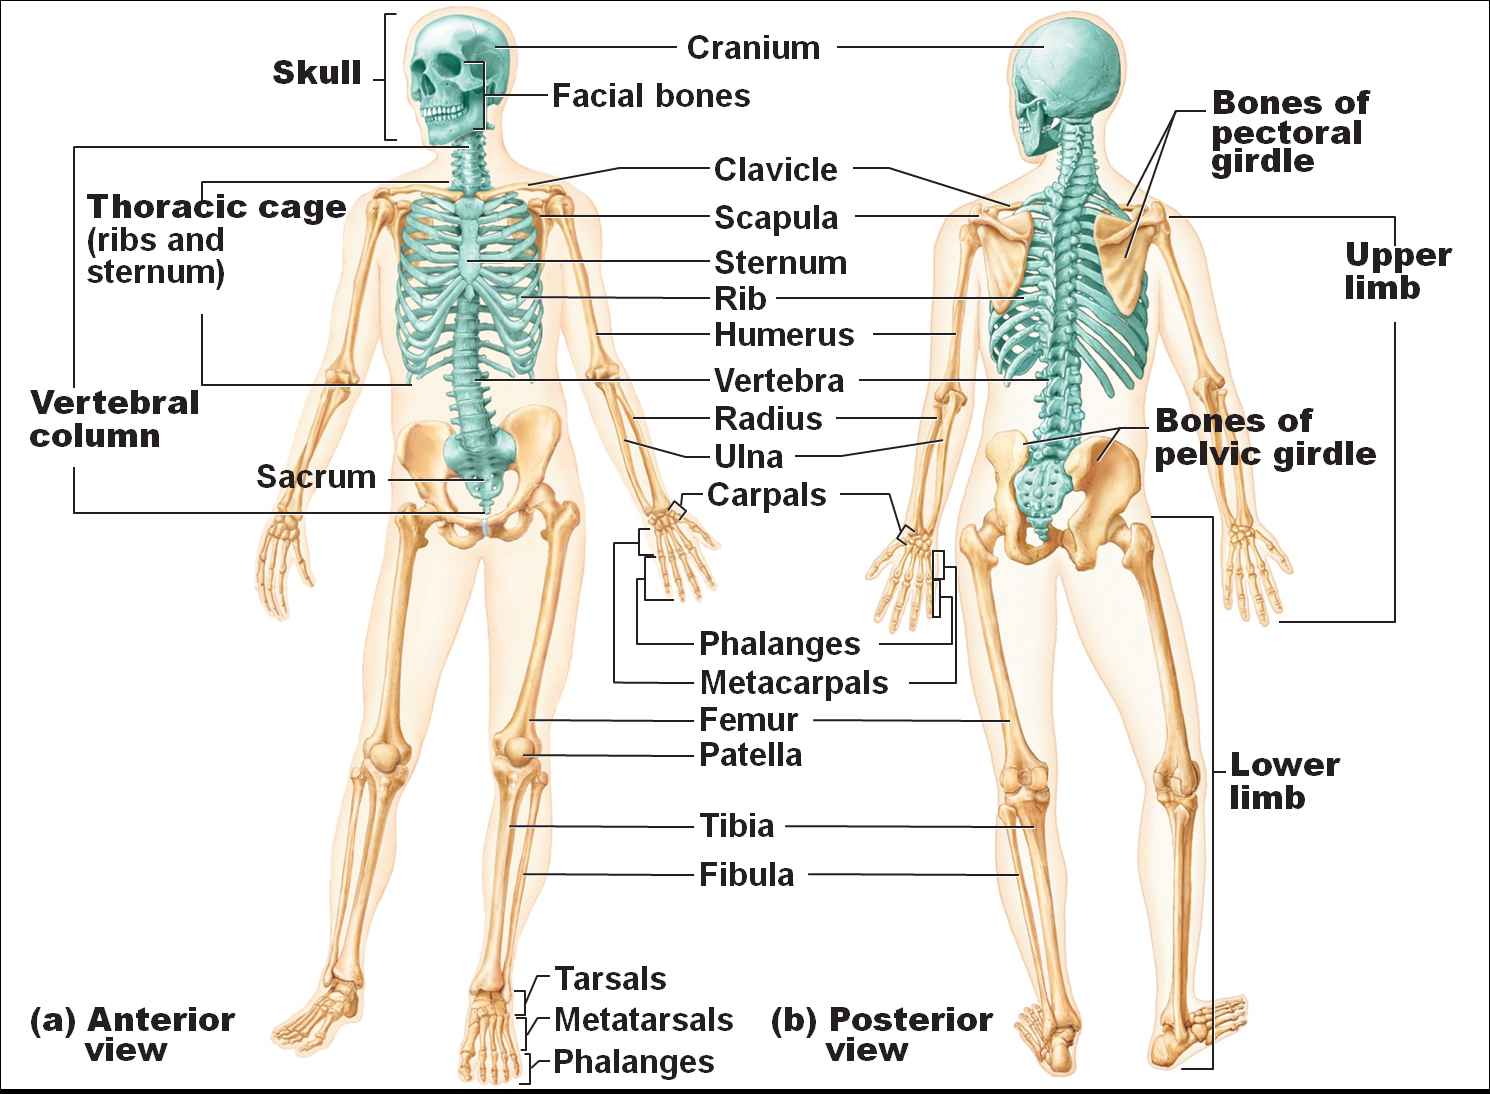 Human Skeletal System Diagram Coordstudenti